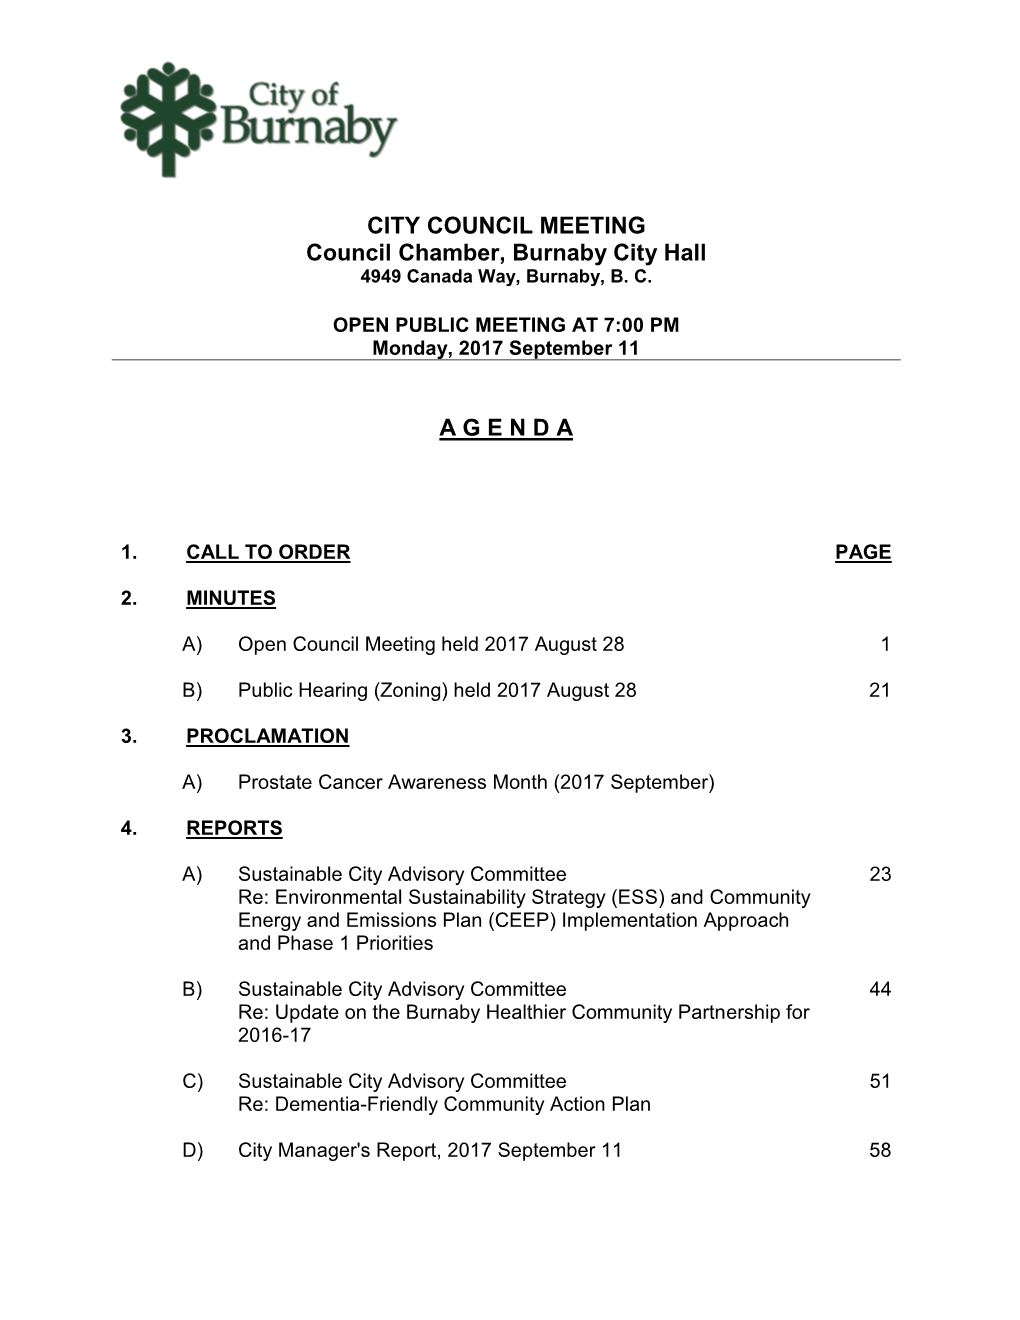 CITY COUNCIL MEETING Council Chamber, Burnaby City Hall 4949 Canada Way, Burnaby, B